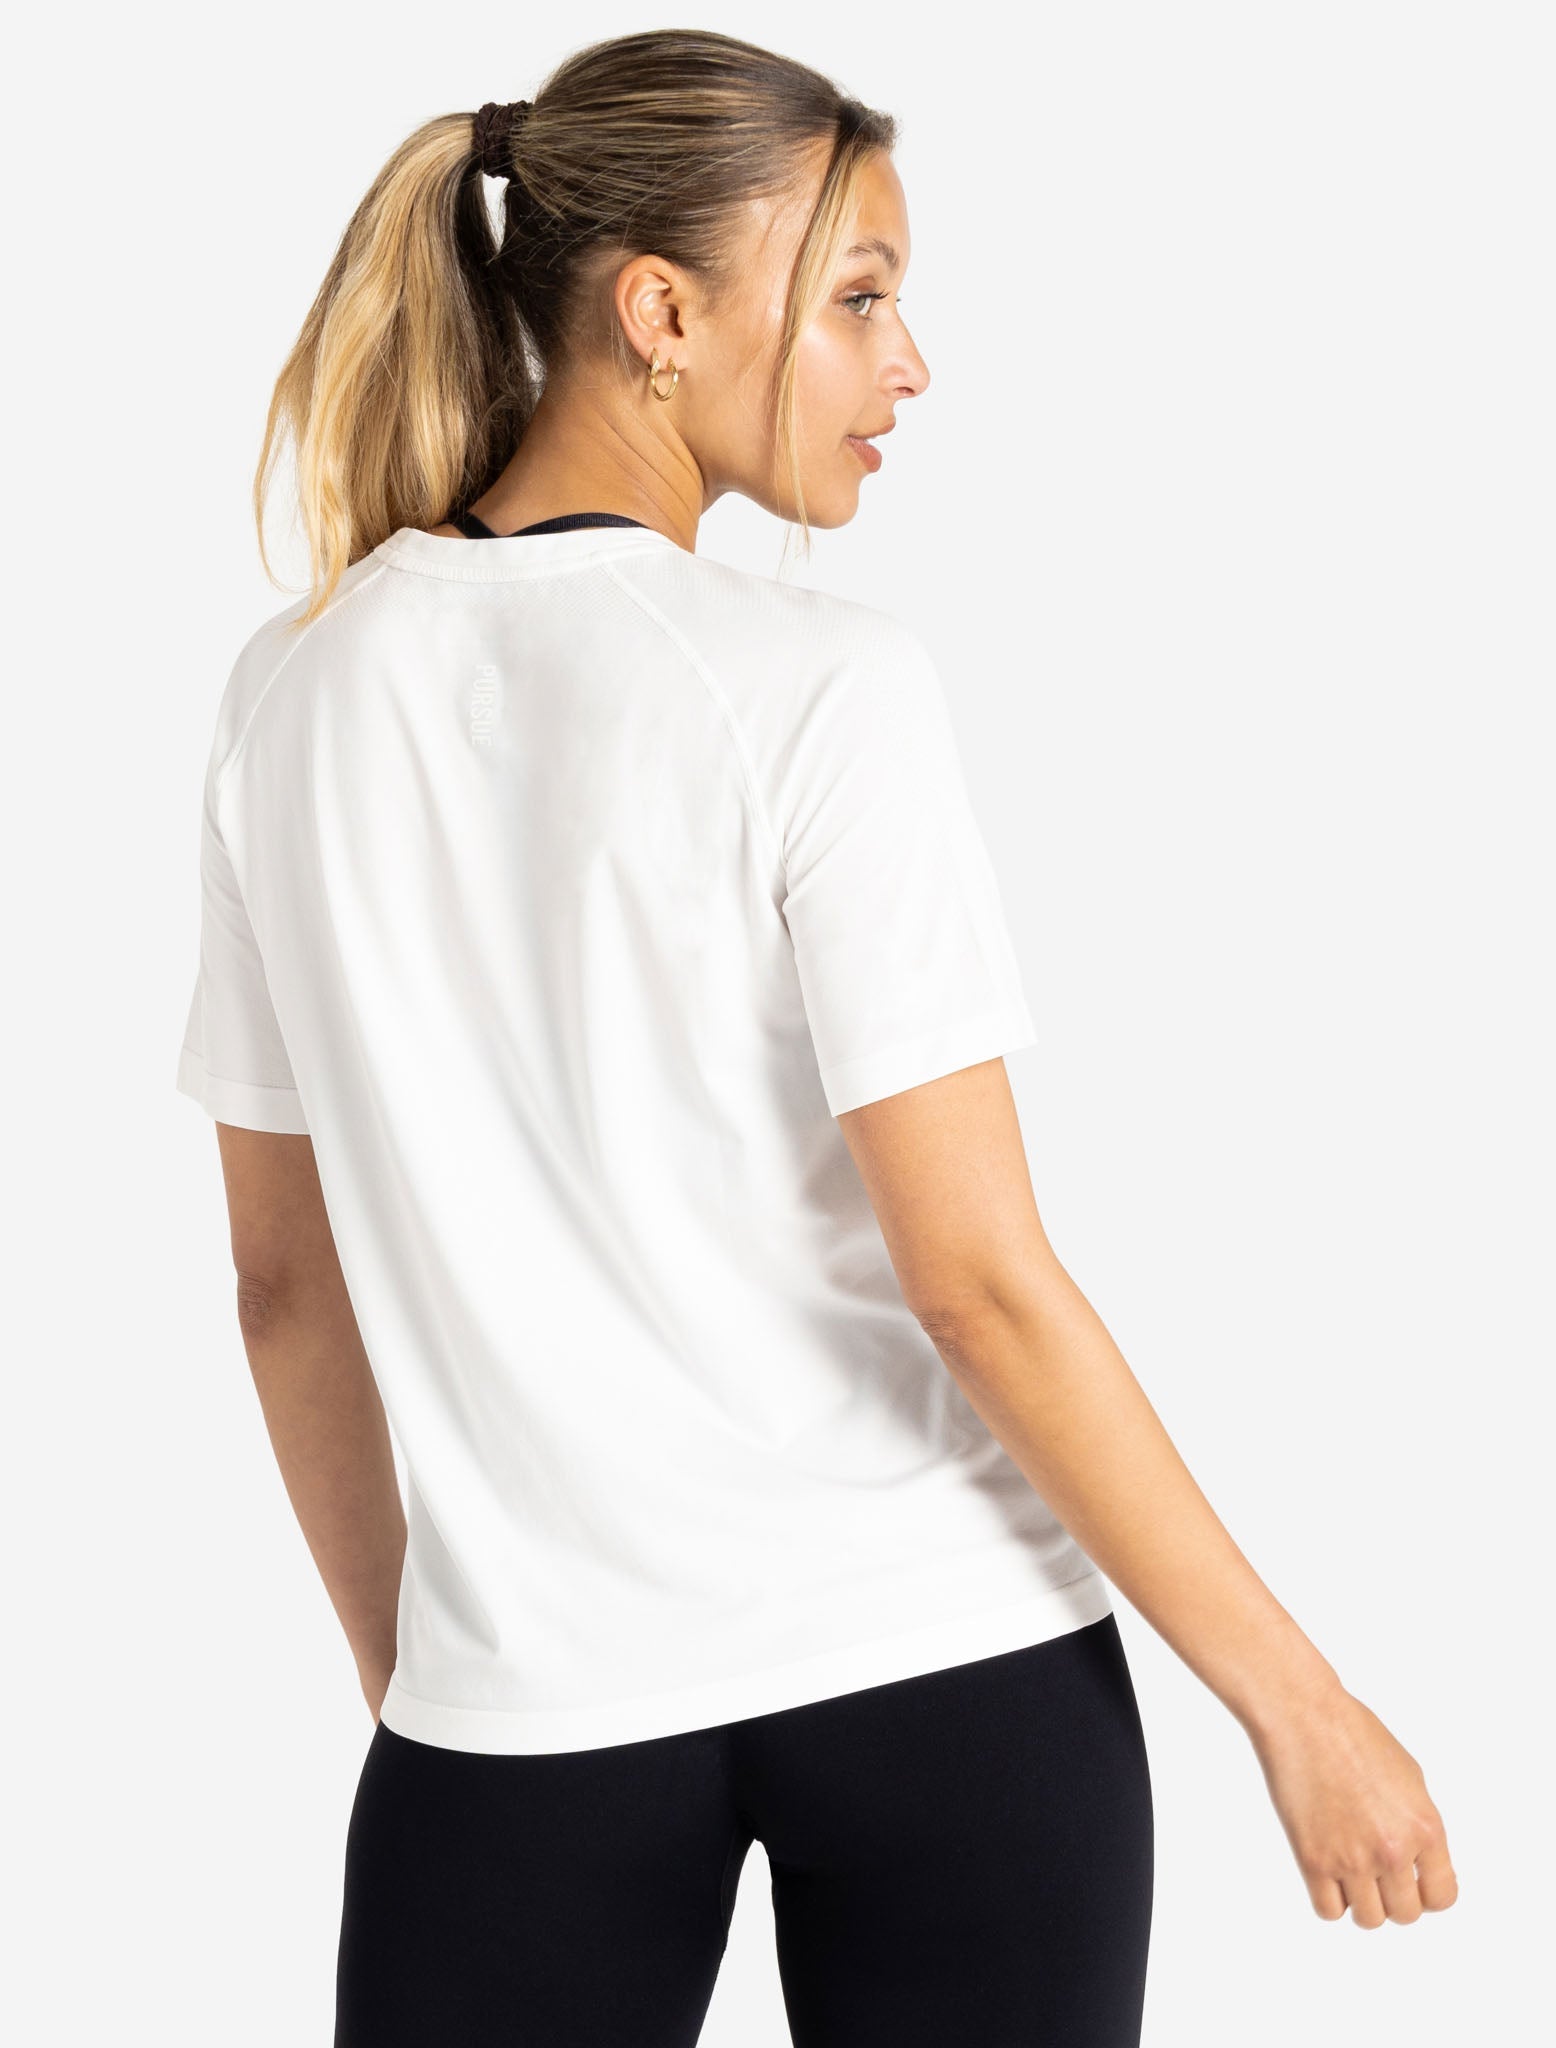 Seamless T-Shirt / White Pursue Fitness 3